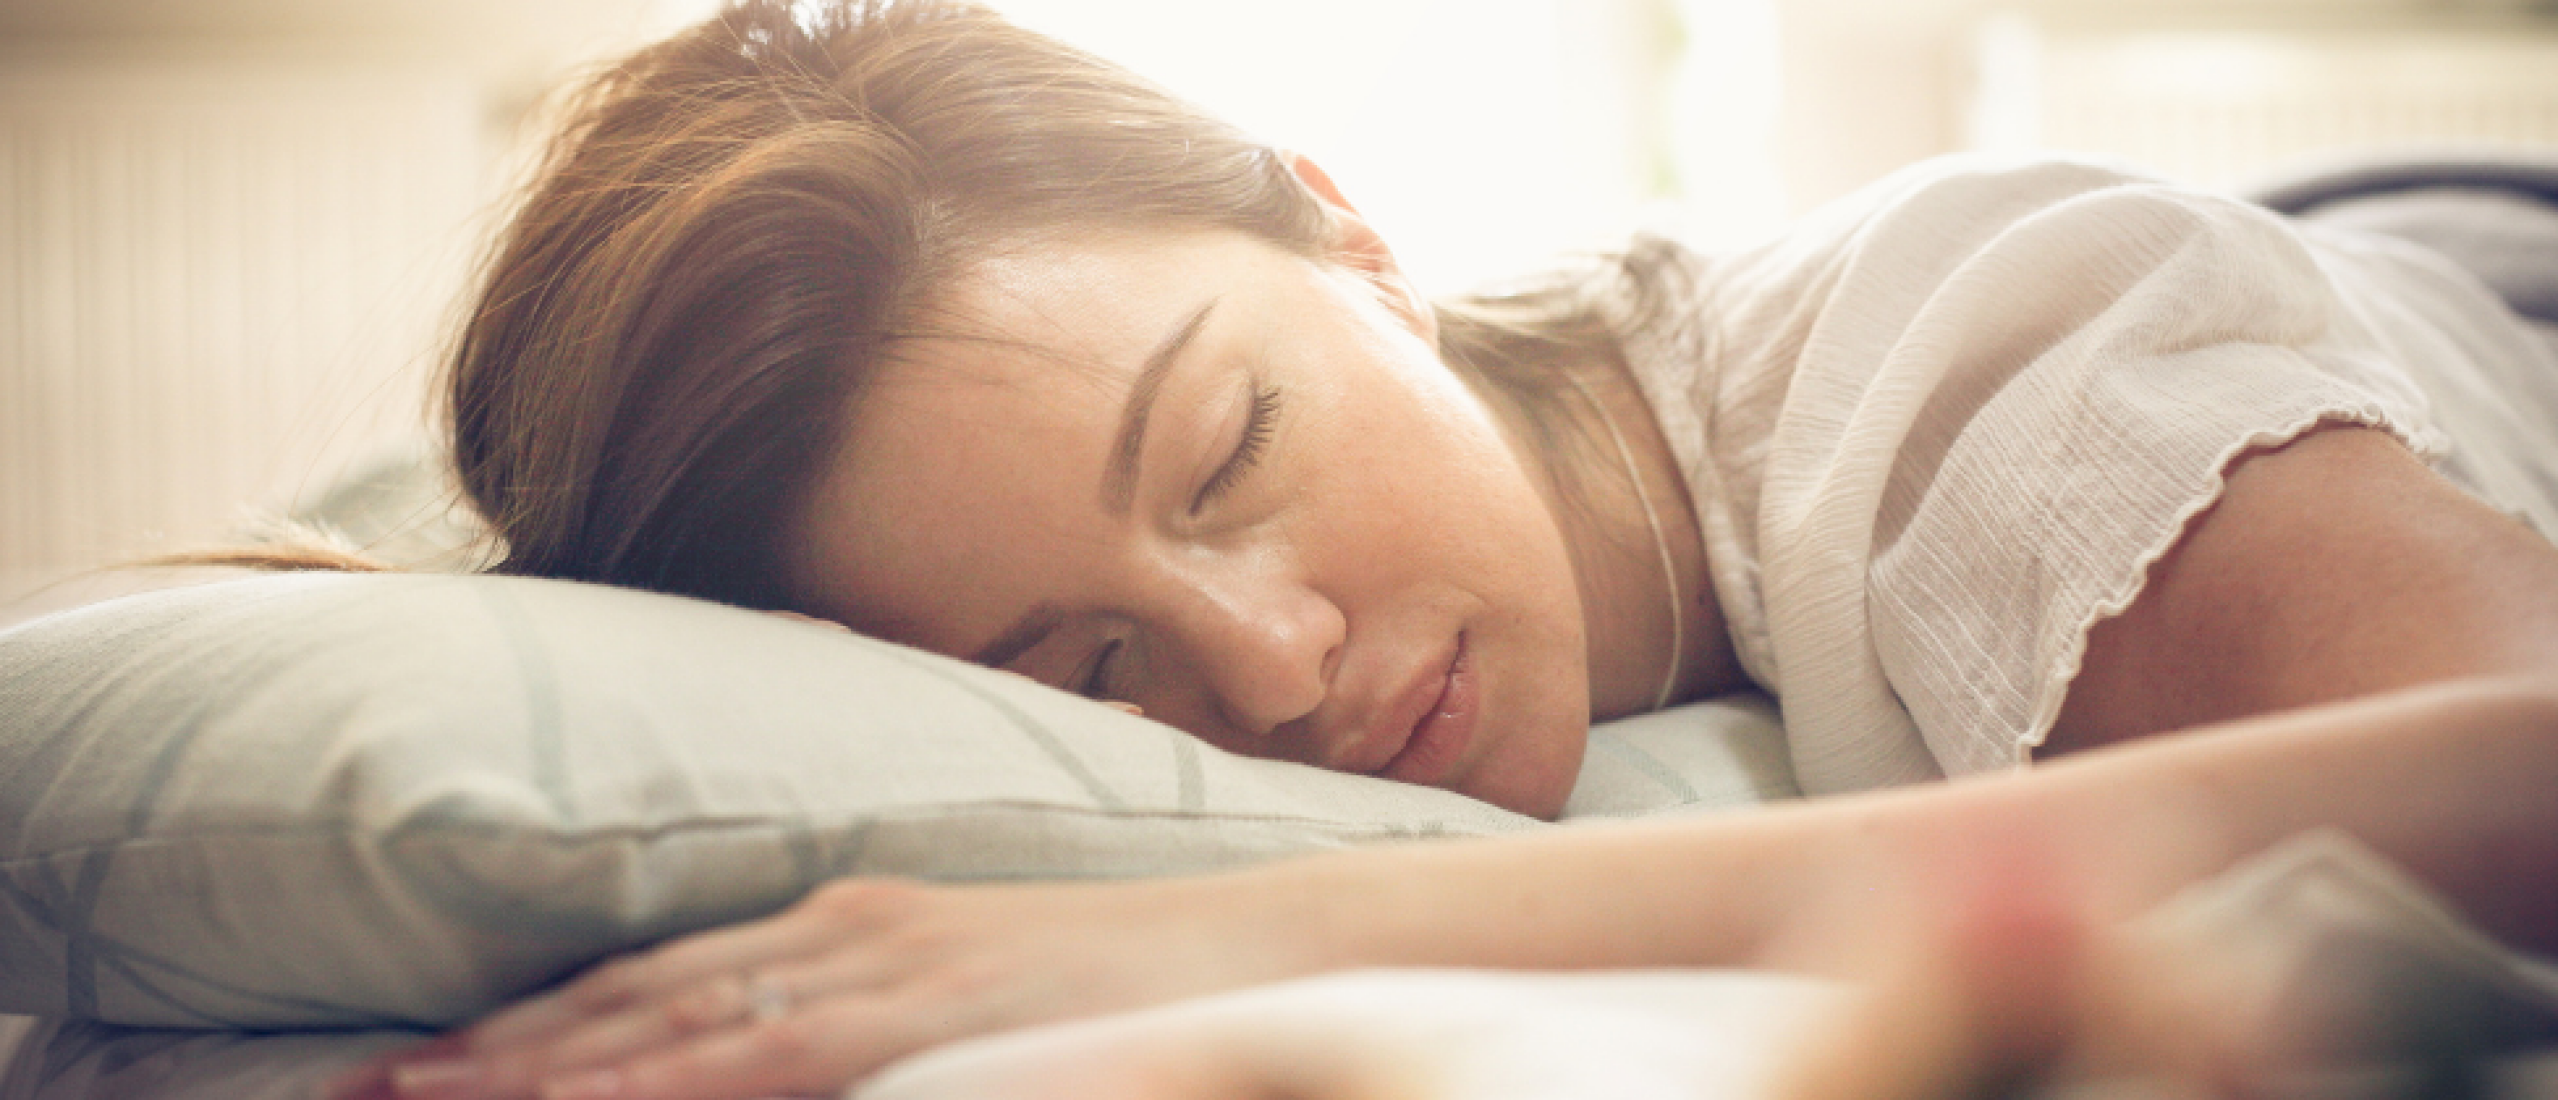 Blog overview beauty sleep